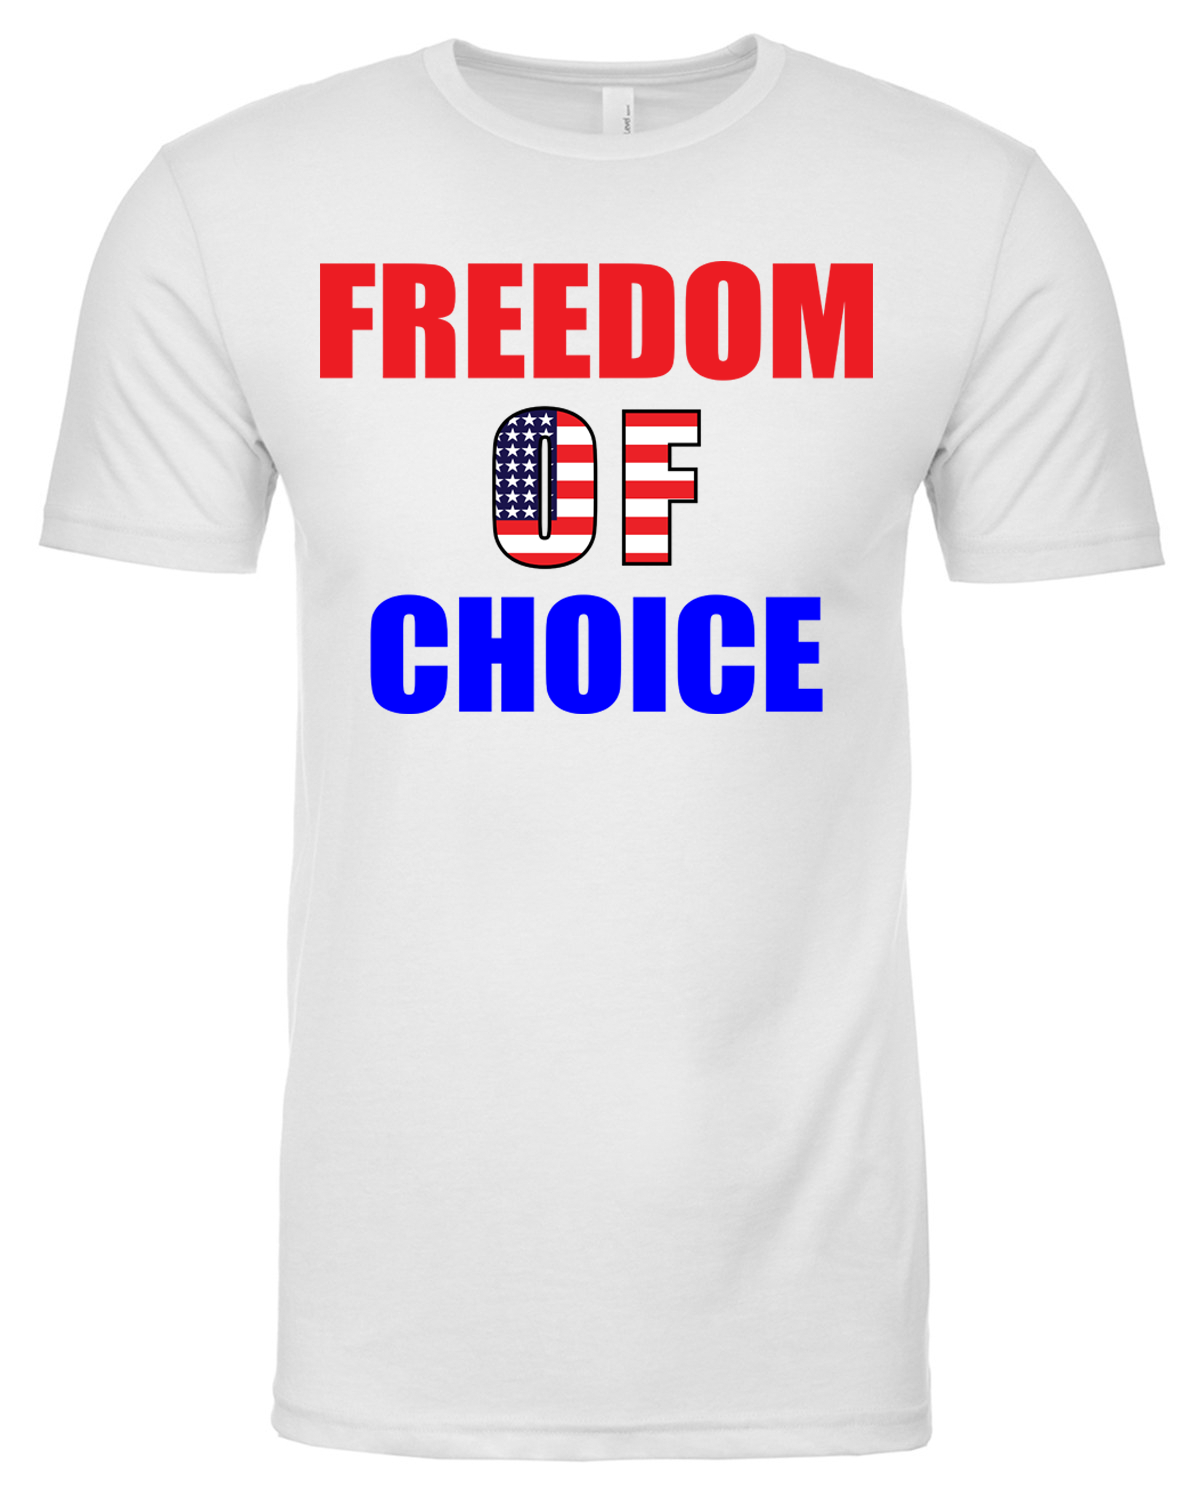 Freedom of Choice Tee - XS-6XL